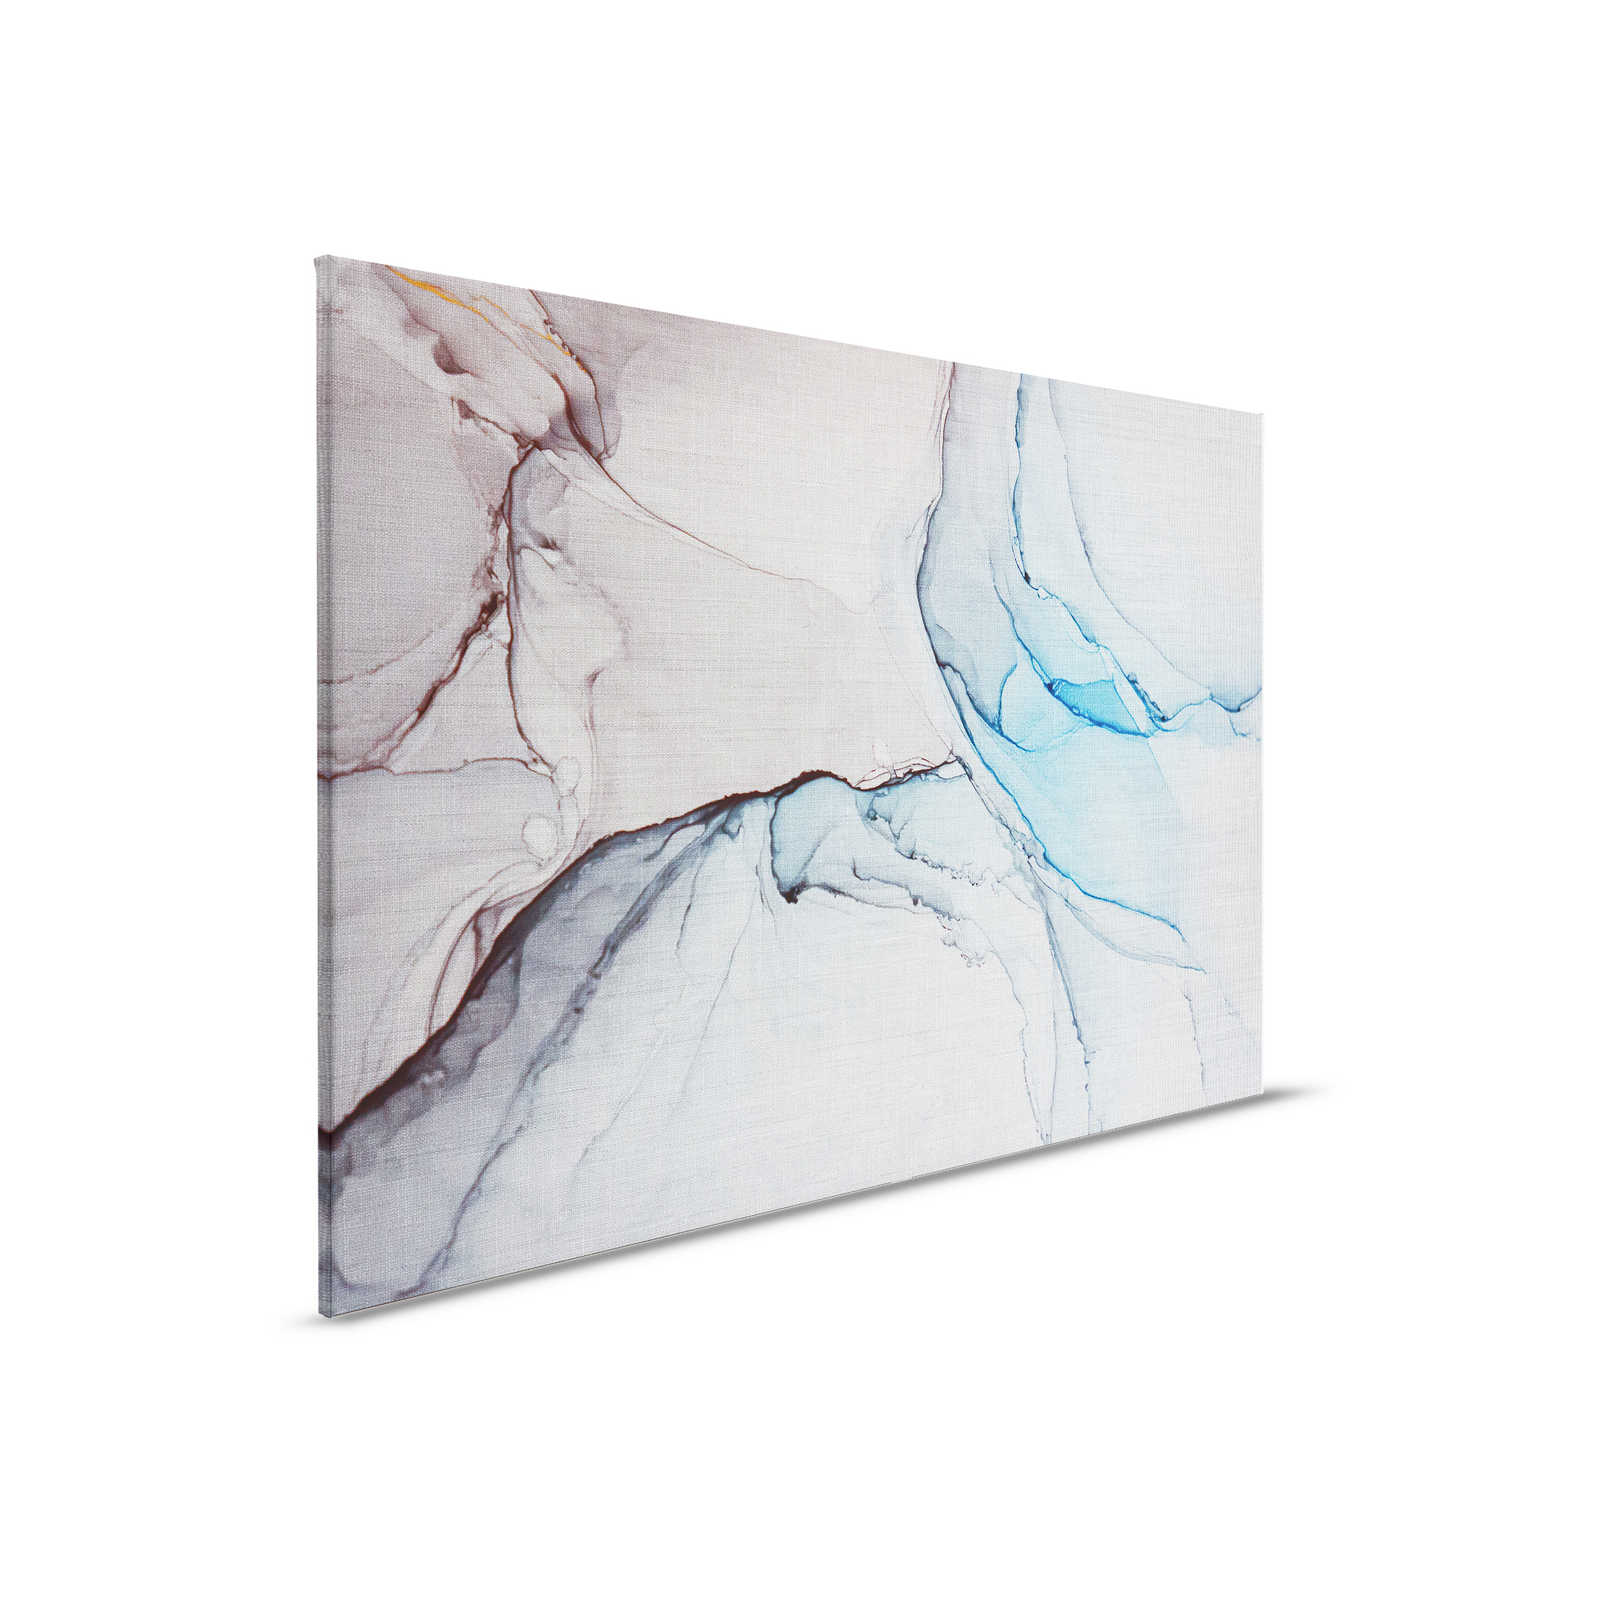 Leinwandbild mit Marmor-Muster aus Leinenoptik – 0,90 m x 0,60 m
